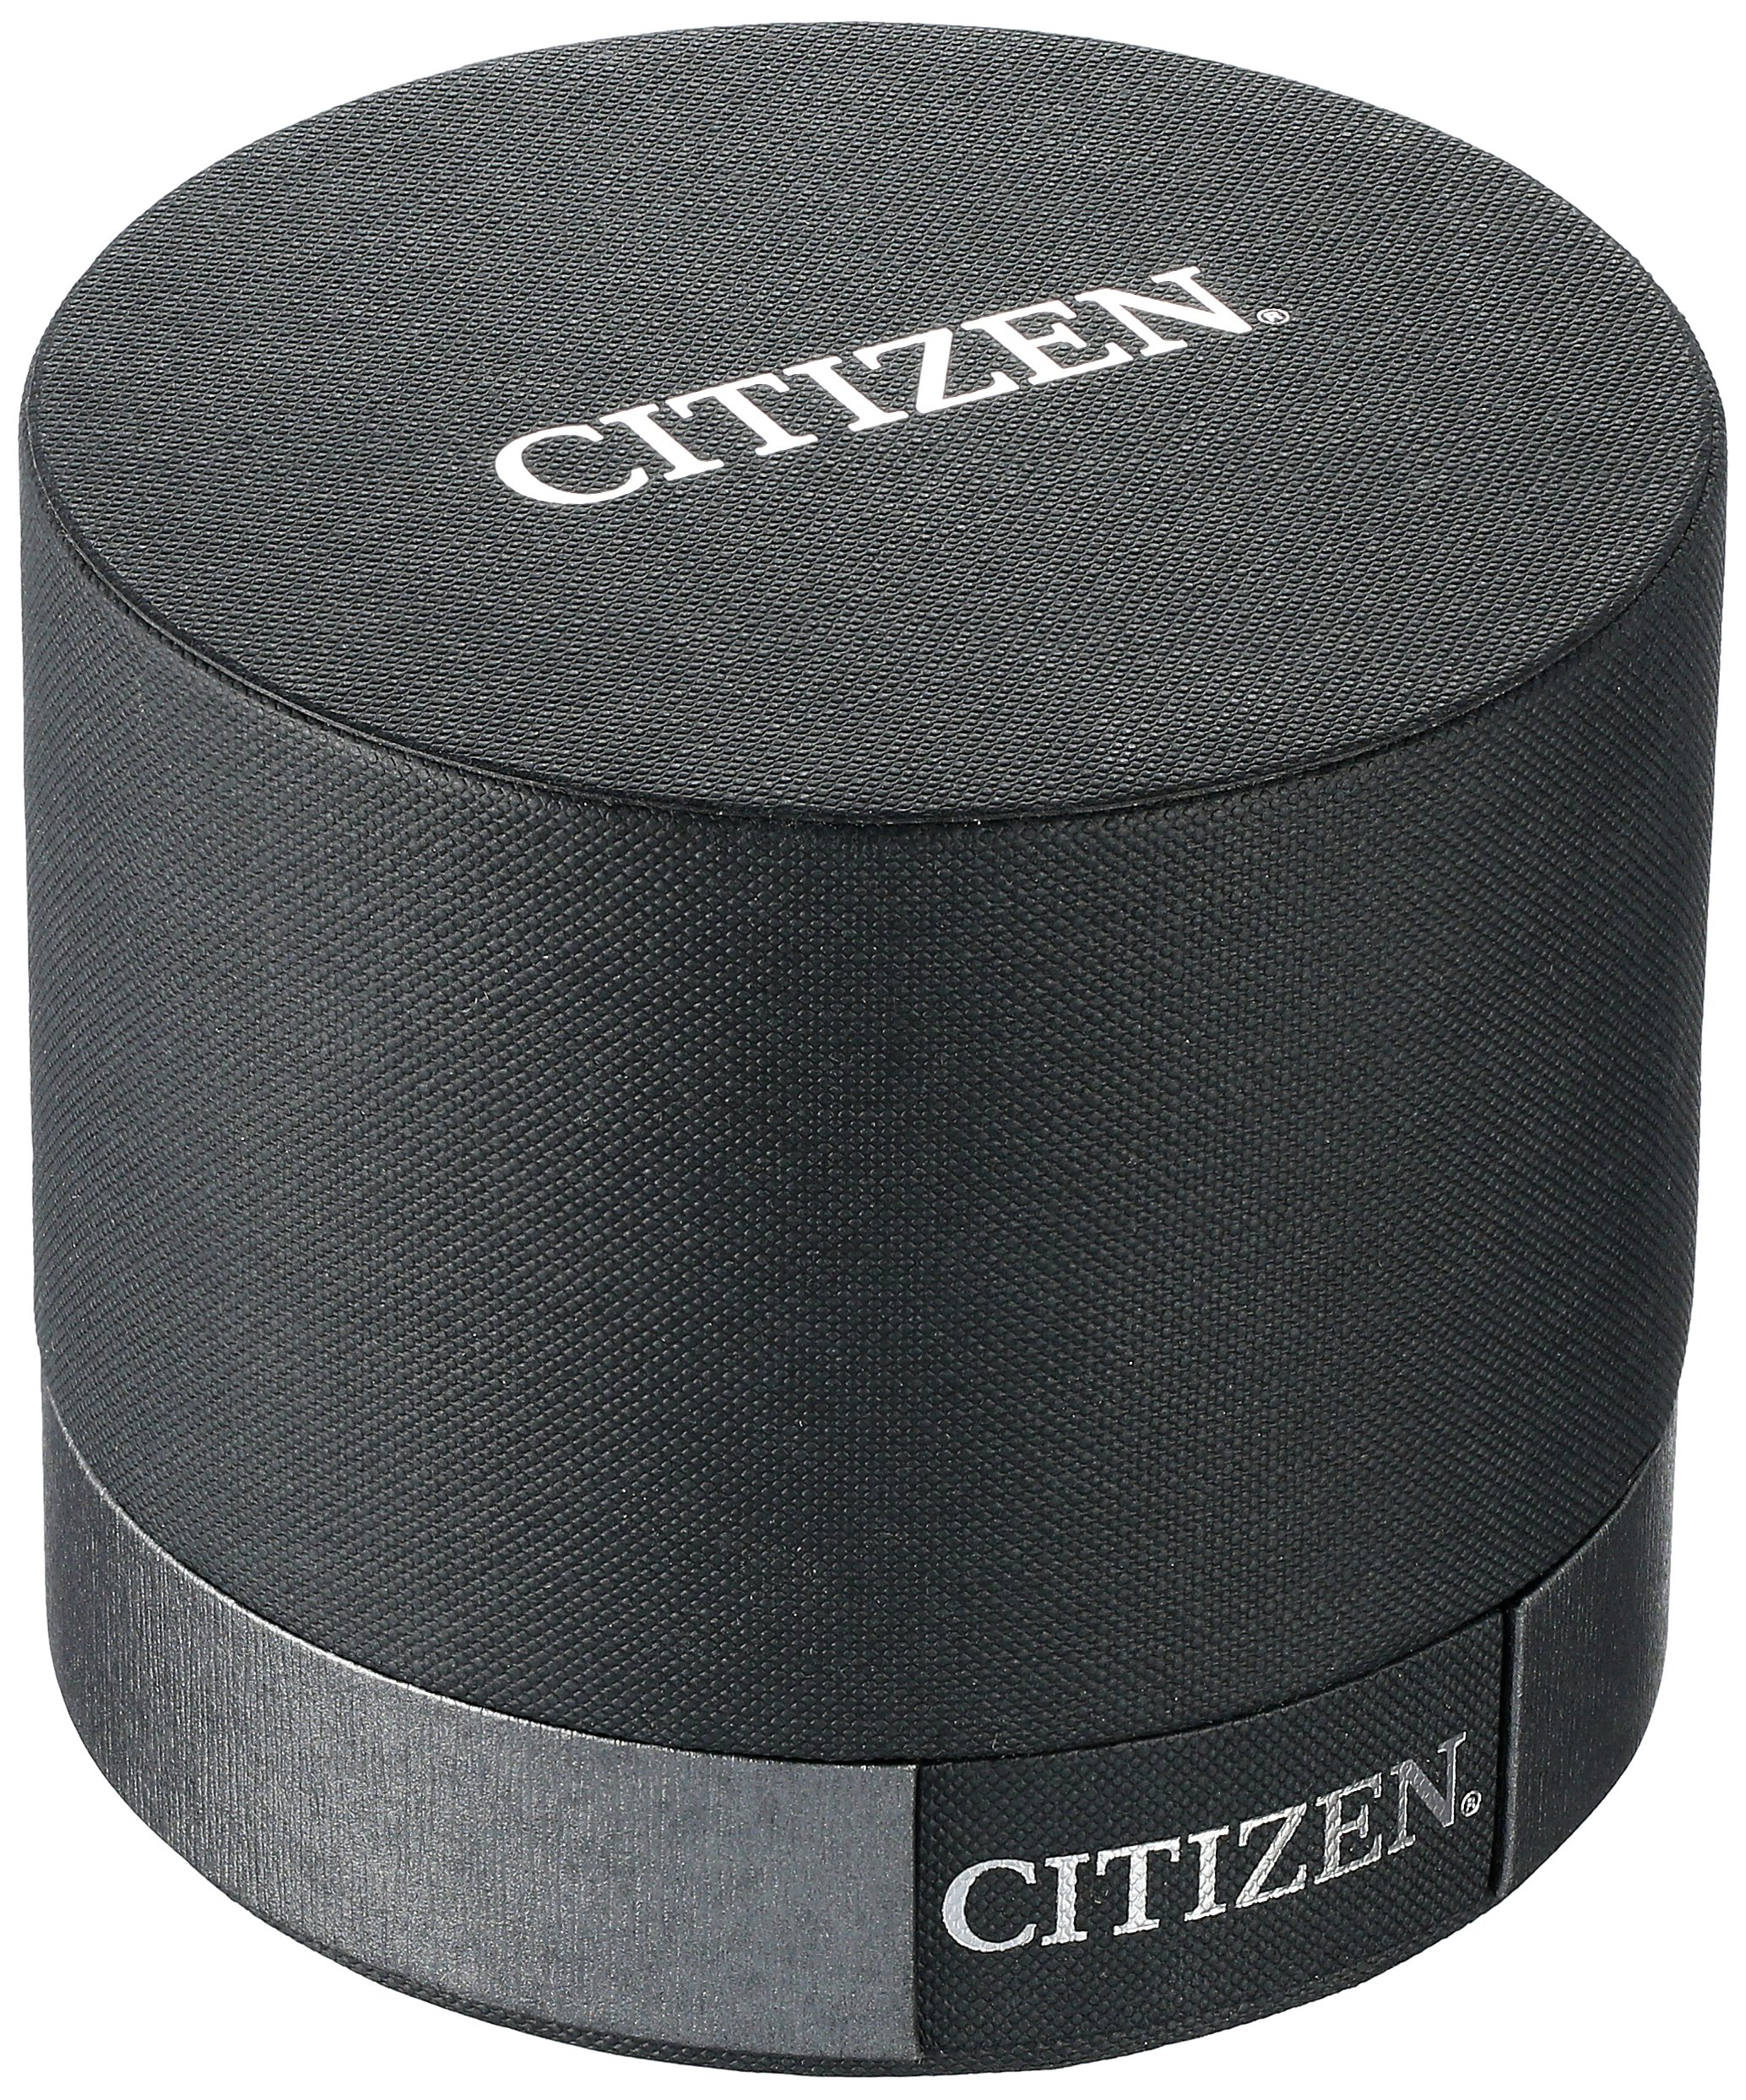 Citizen Quartz Womens Watch, Stainless Steel, Classic, Silver-Tone (Model: EQ0540-57A)